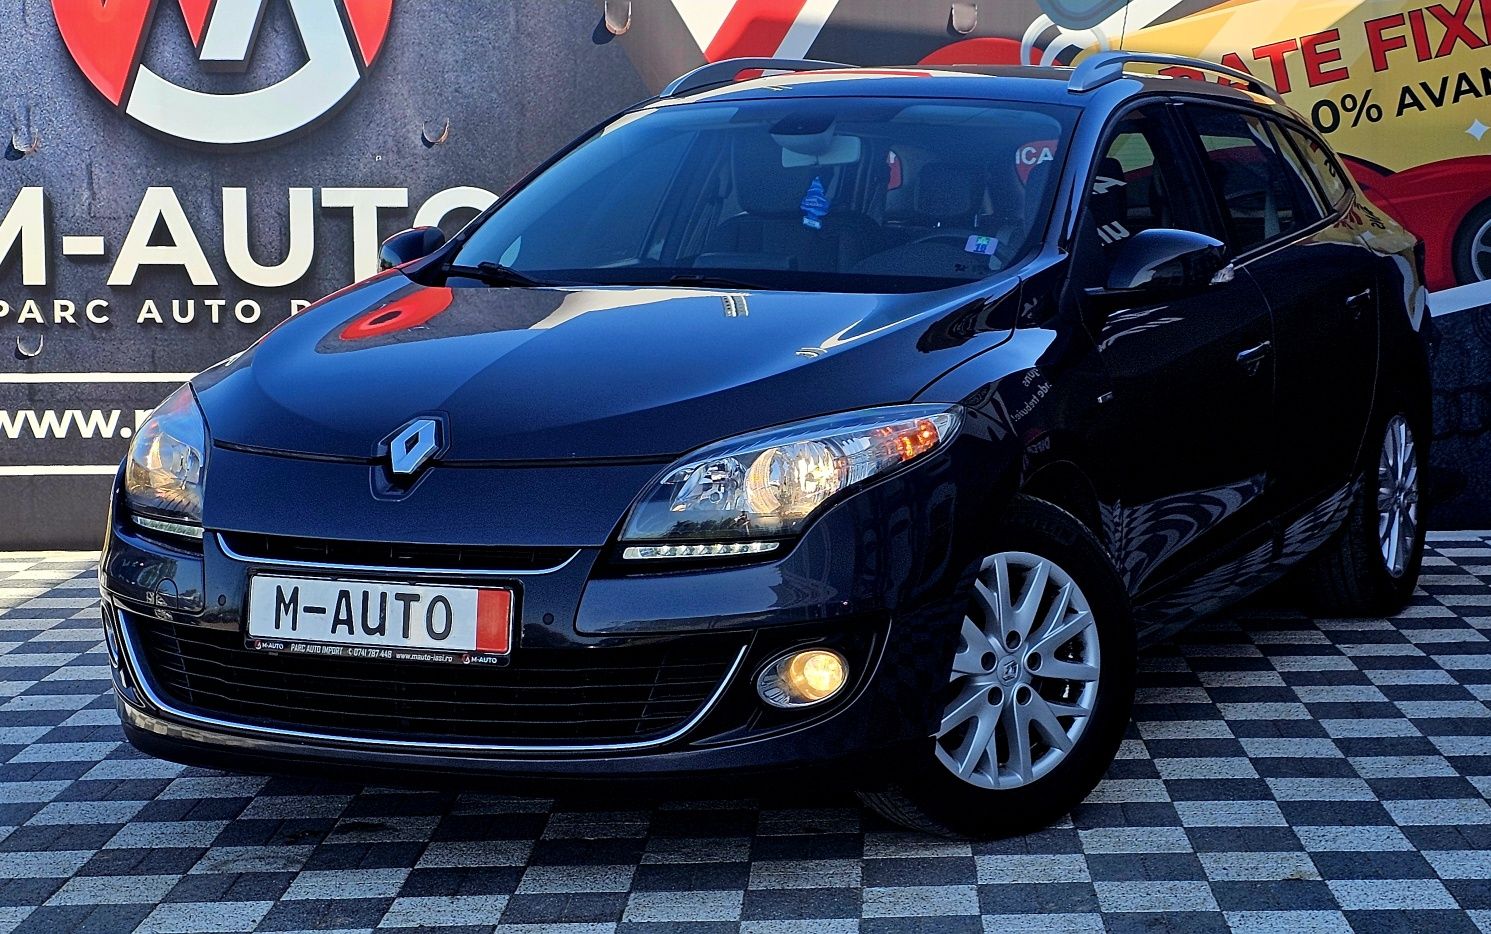 Renault Megane BOSE 2013 1.5 dci klima Navi Rate Livrare Garantie
An f